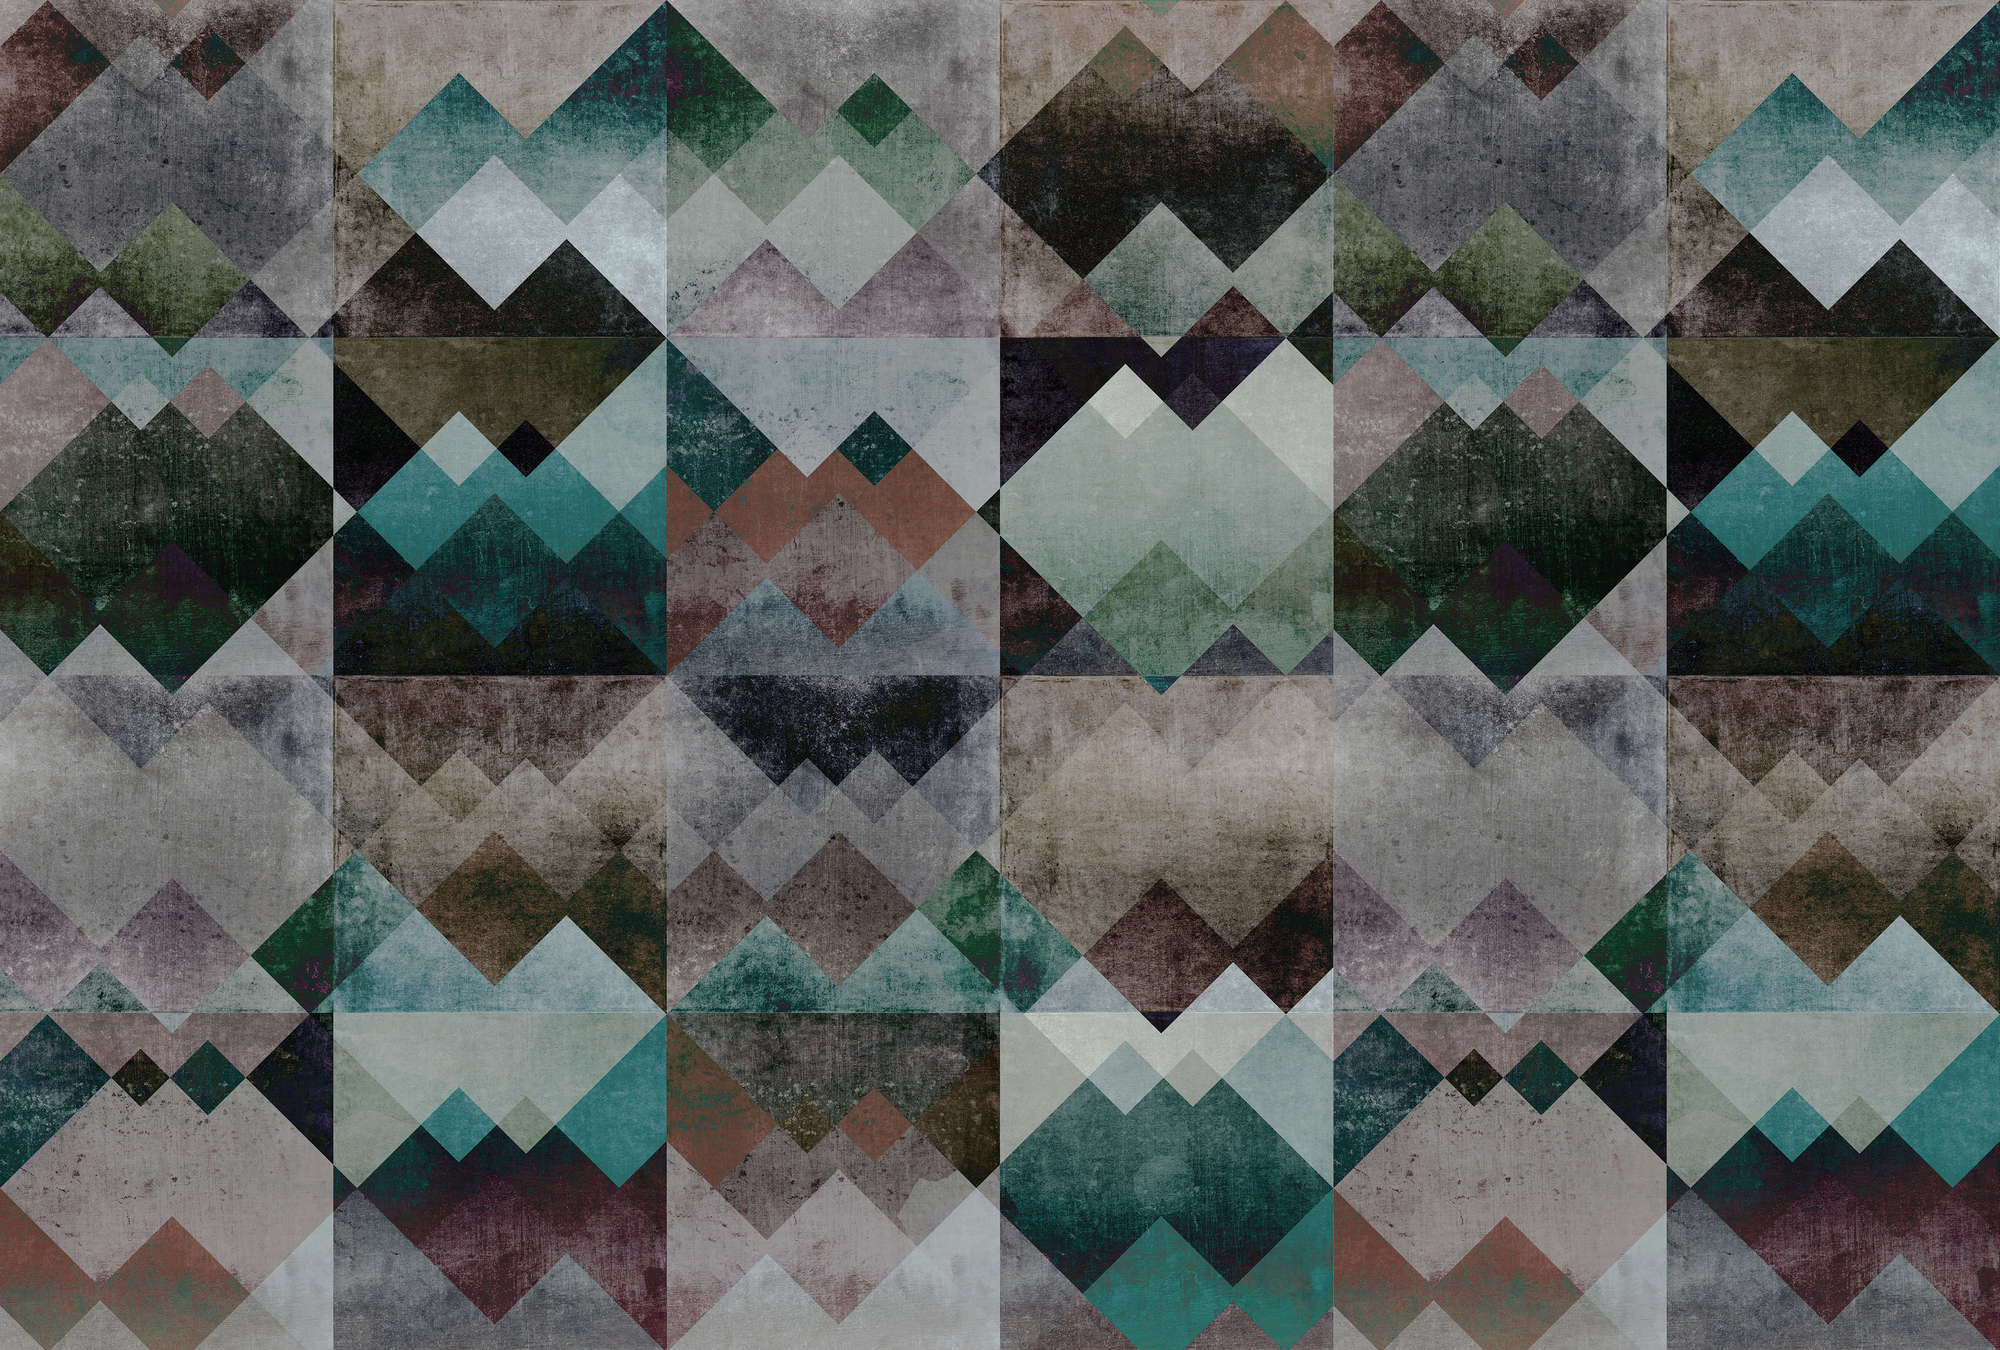             Photo wallpaper Geometric pattern mountains - Green, Beige
        